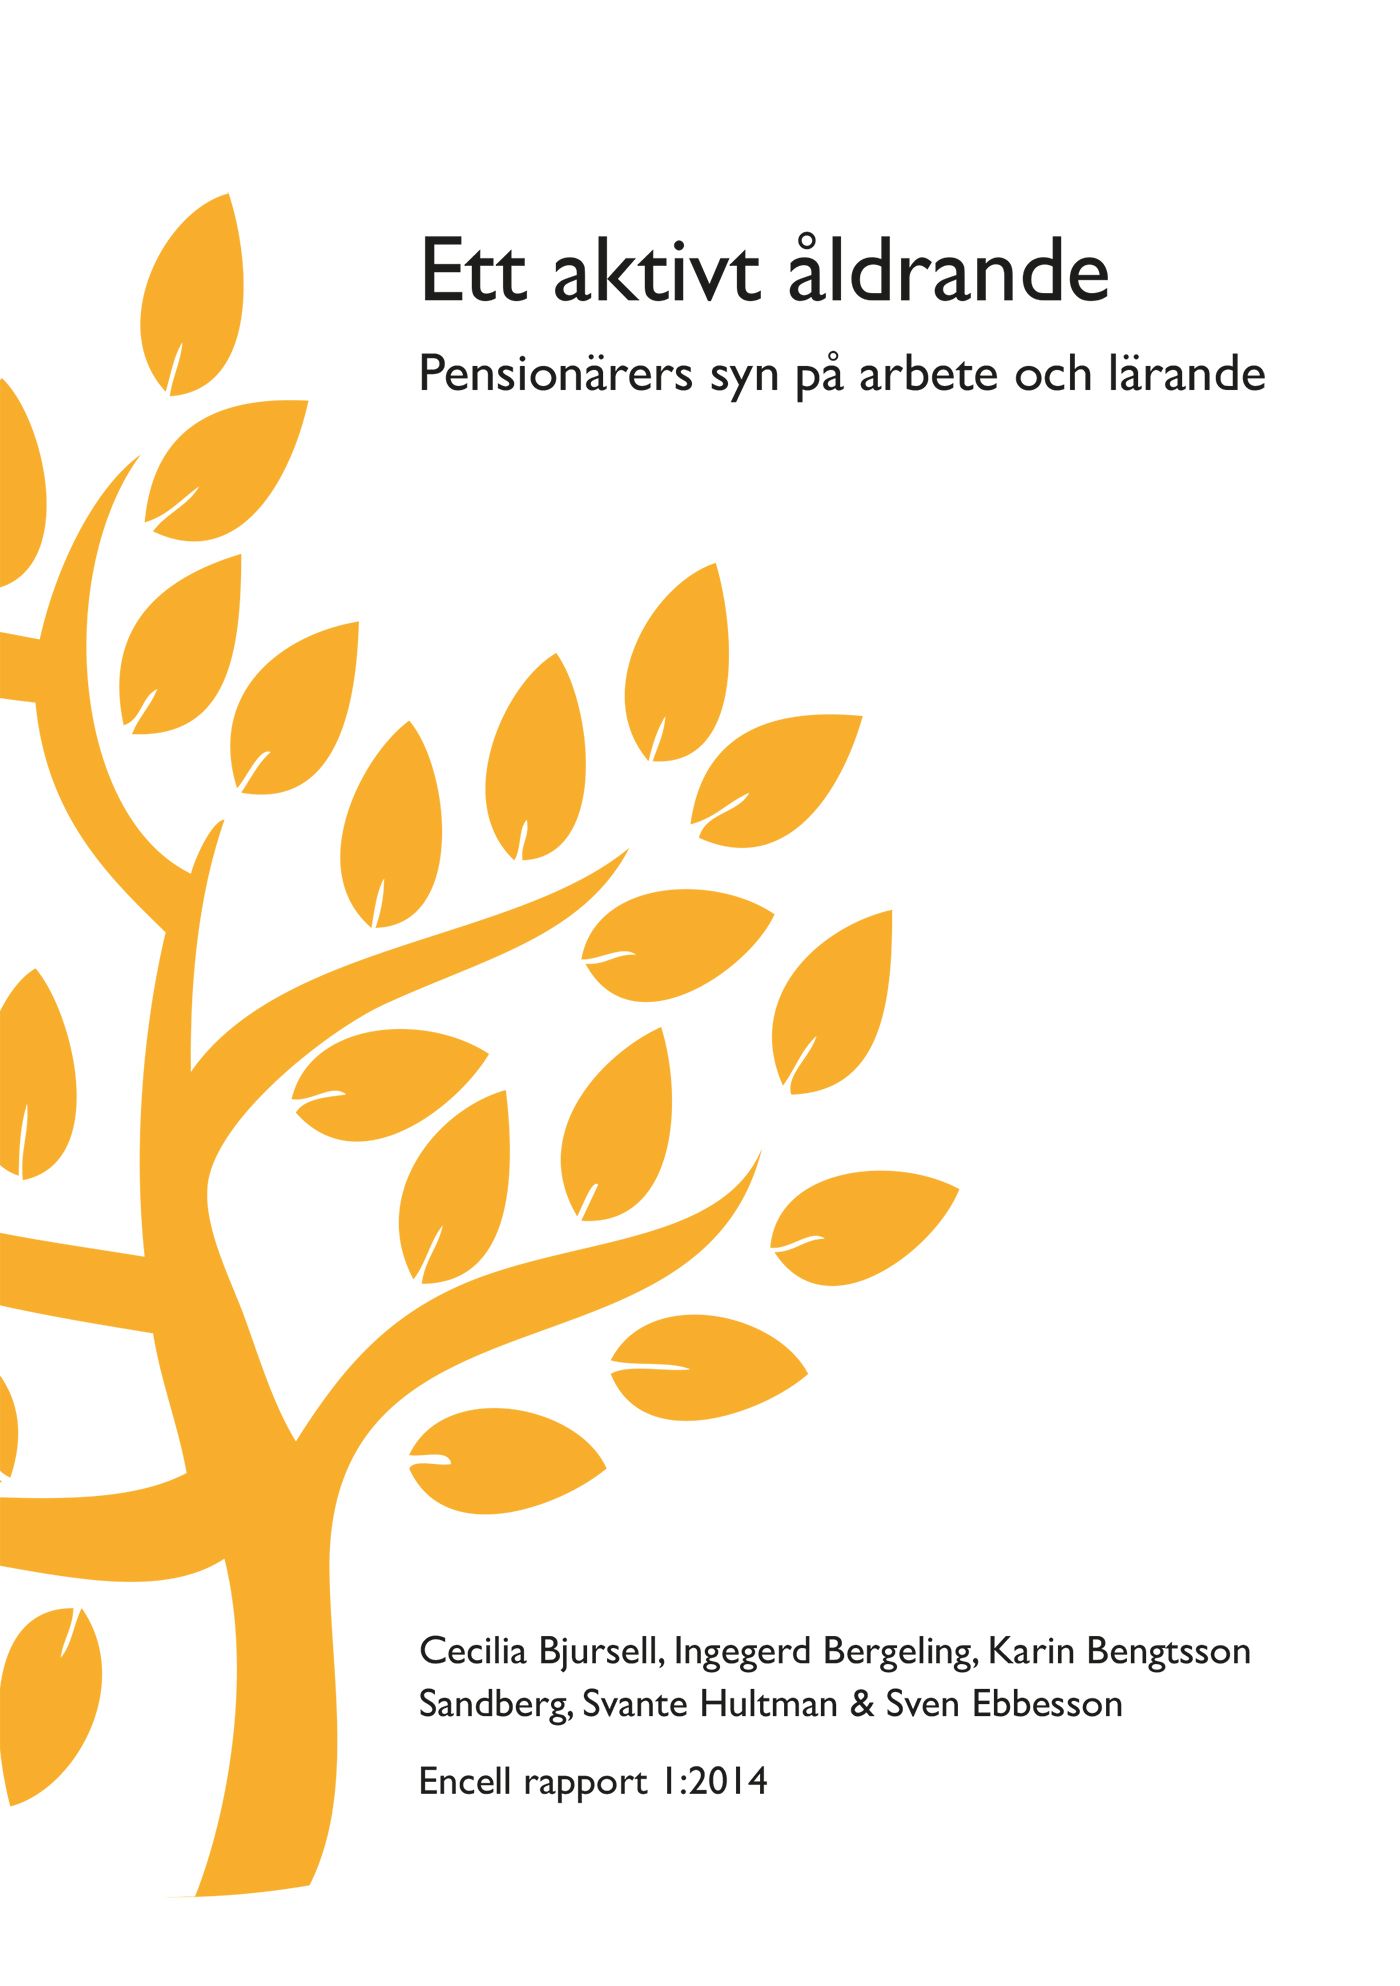 Ett aktivt åldrande, eBook by Karin Bengtsson Sandberg, Ingegerd Bergeling, Cecilia Bjursell, Sven Ebbesson, Svante Hultman